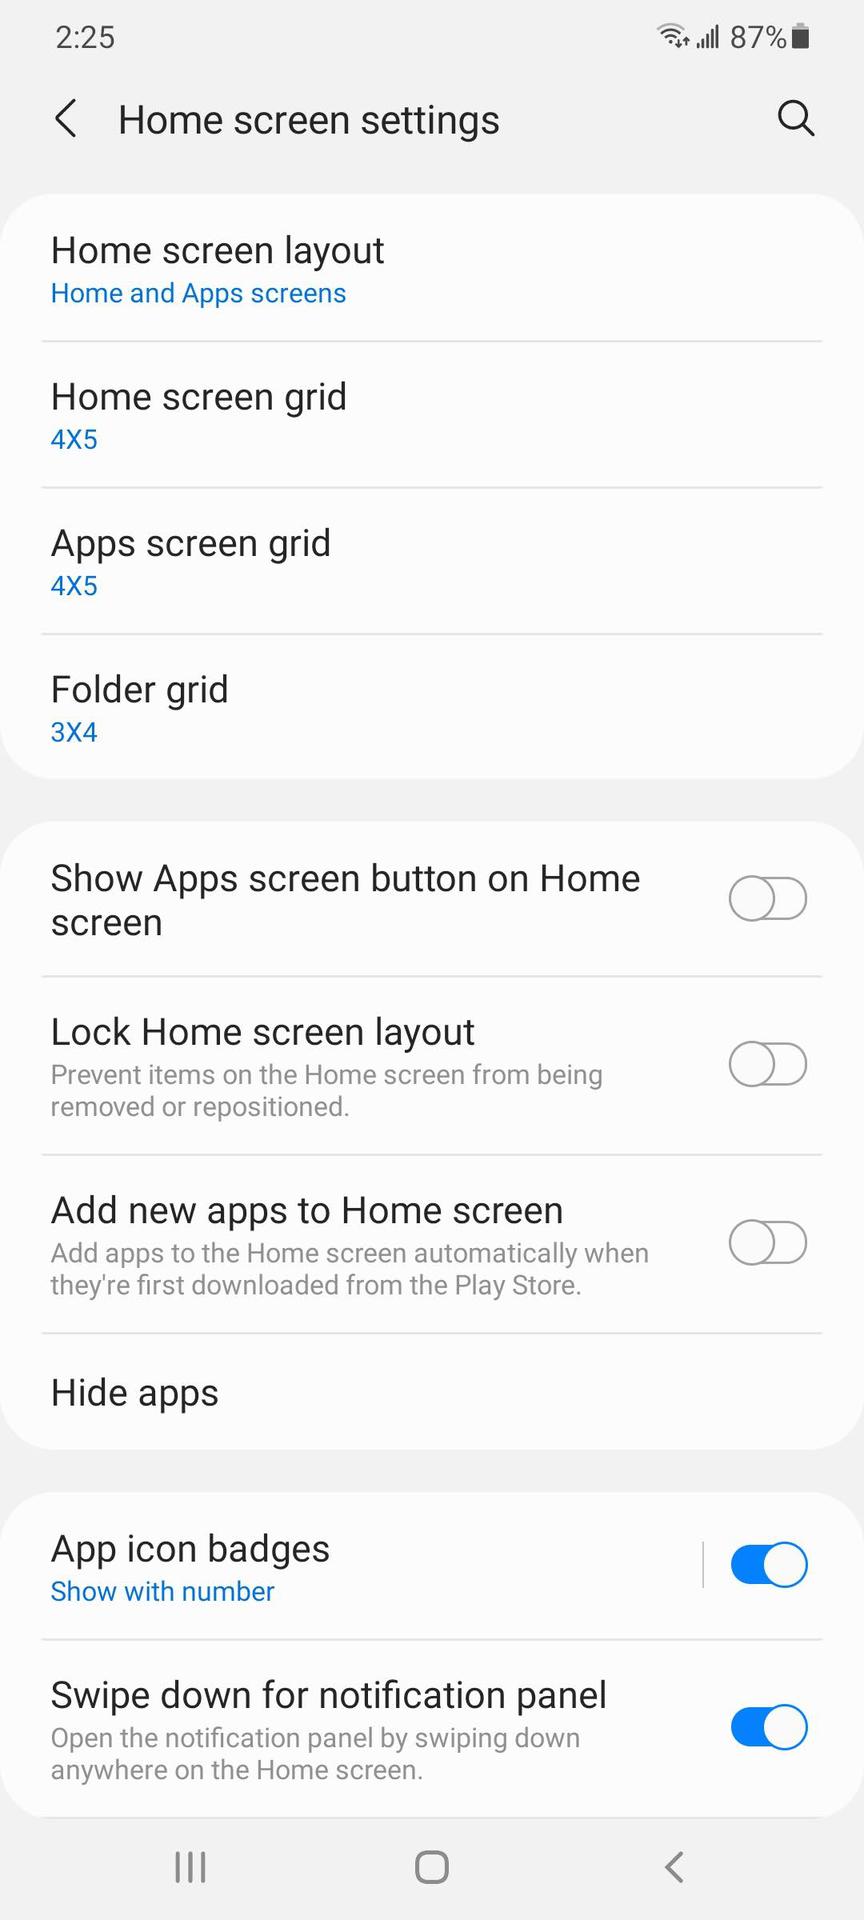 One UI 3.0 Home Screen Settings